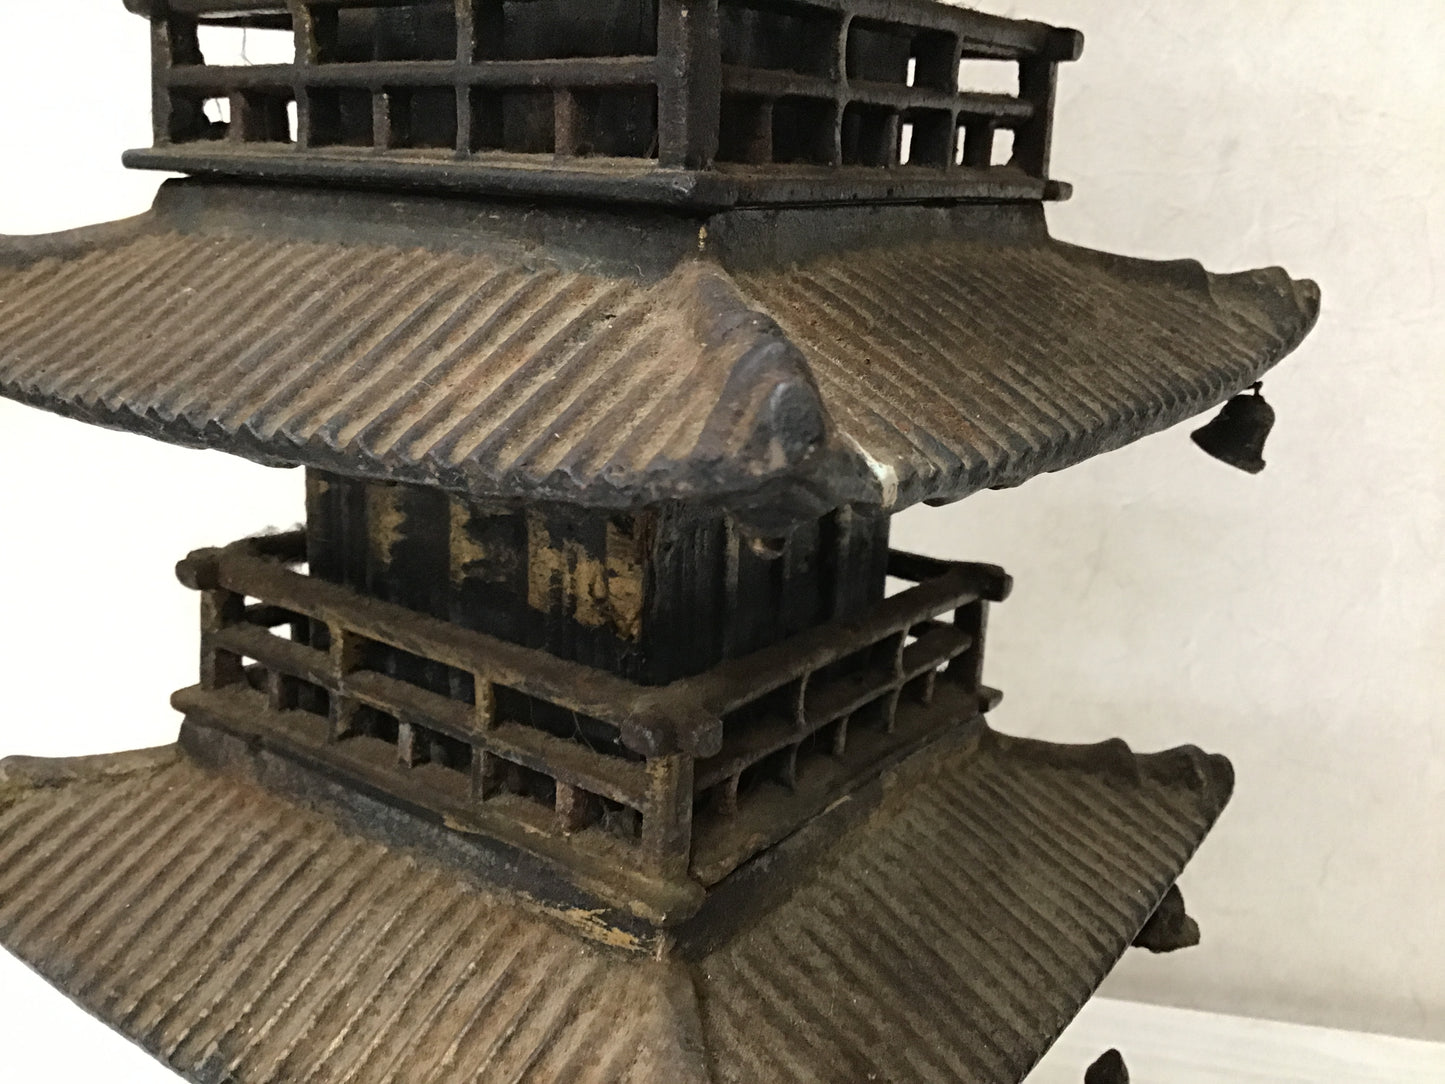 Y2673 OKIMONO Iron Five-storied Pagoda figure Japan antique decor interior